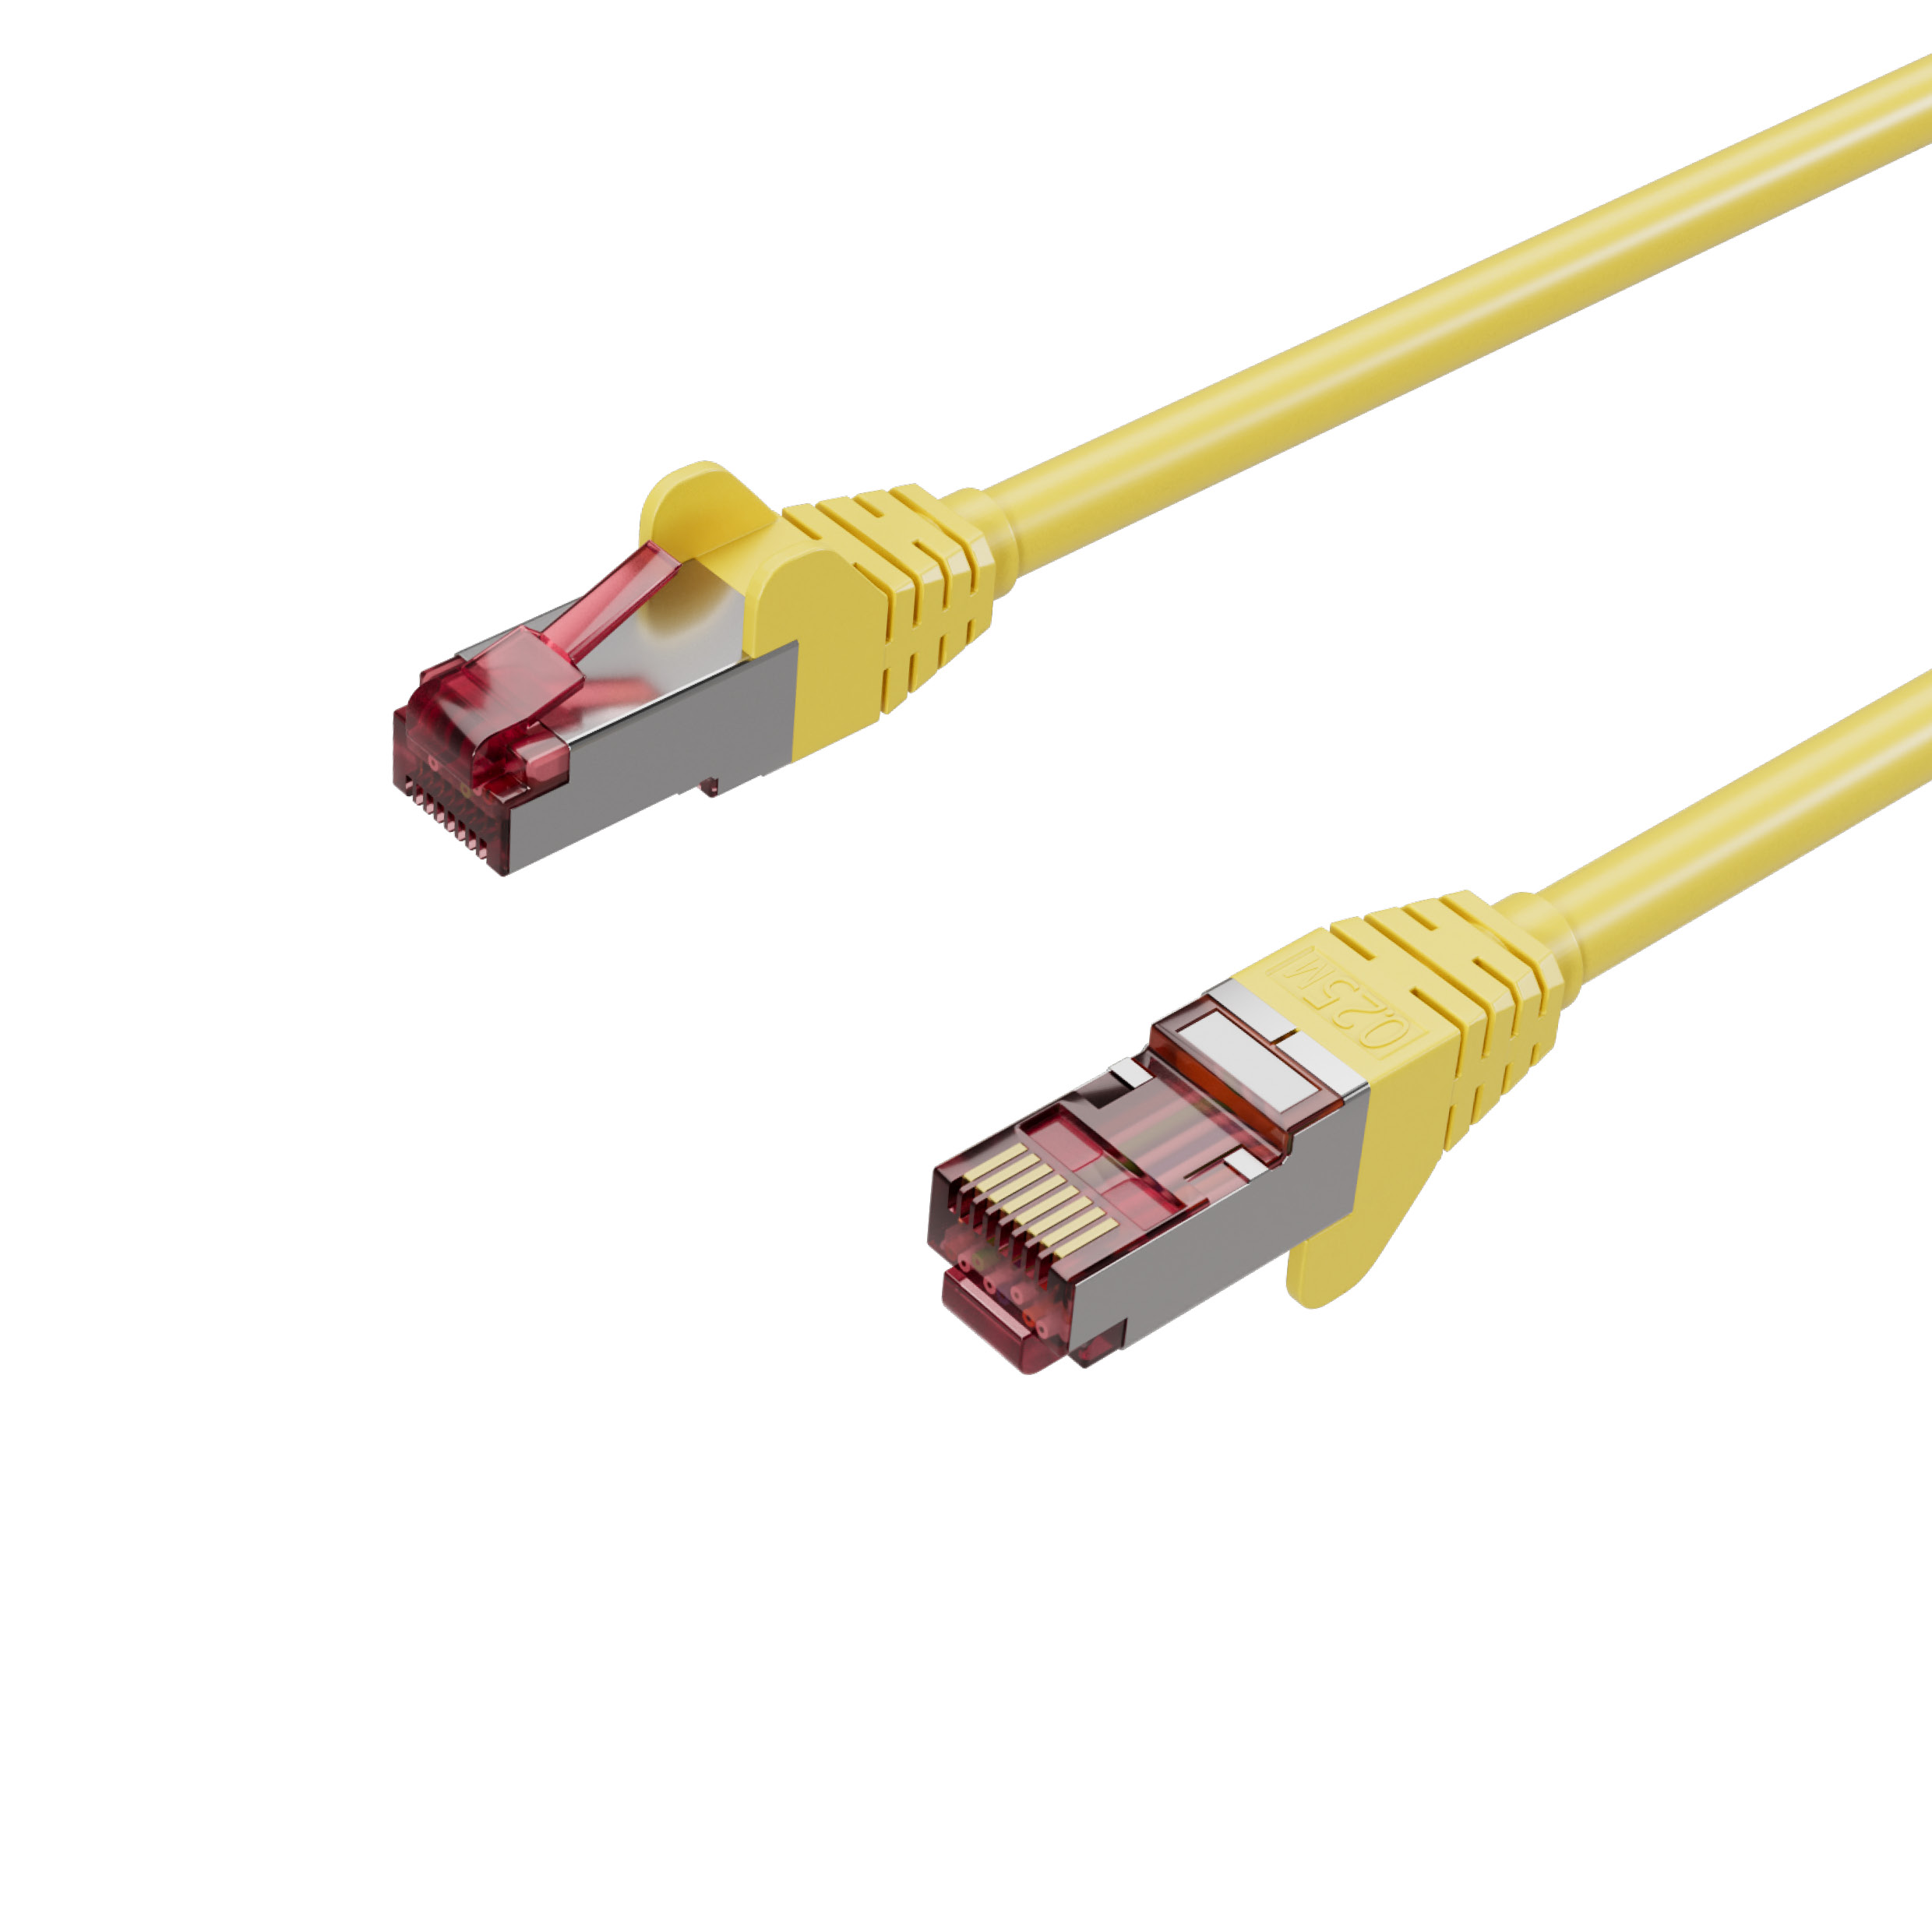 KABELBUDE Netzwerkkabel, RJ45 Ethernet Gelb S/FTP, 5,00m, Cat Halogenfrei, 6A, LAN, RJ45, 5 Patchkabel GHMT m PIMF